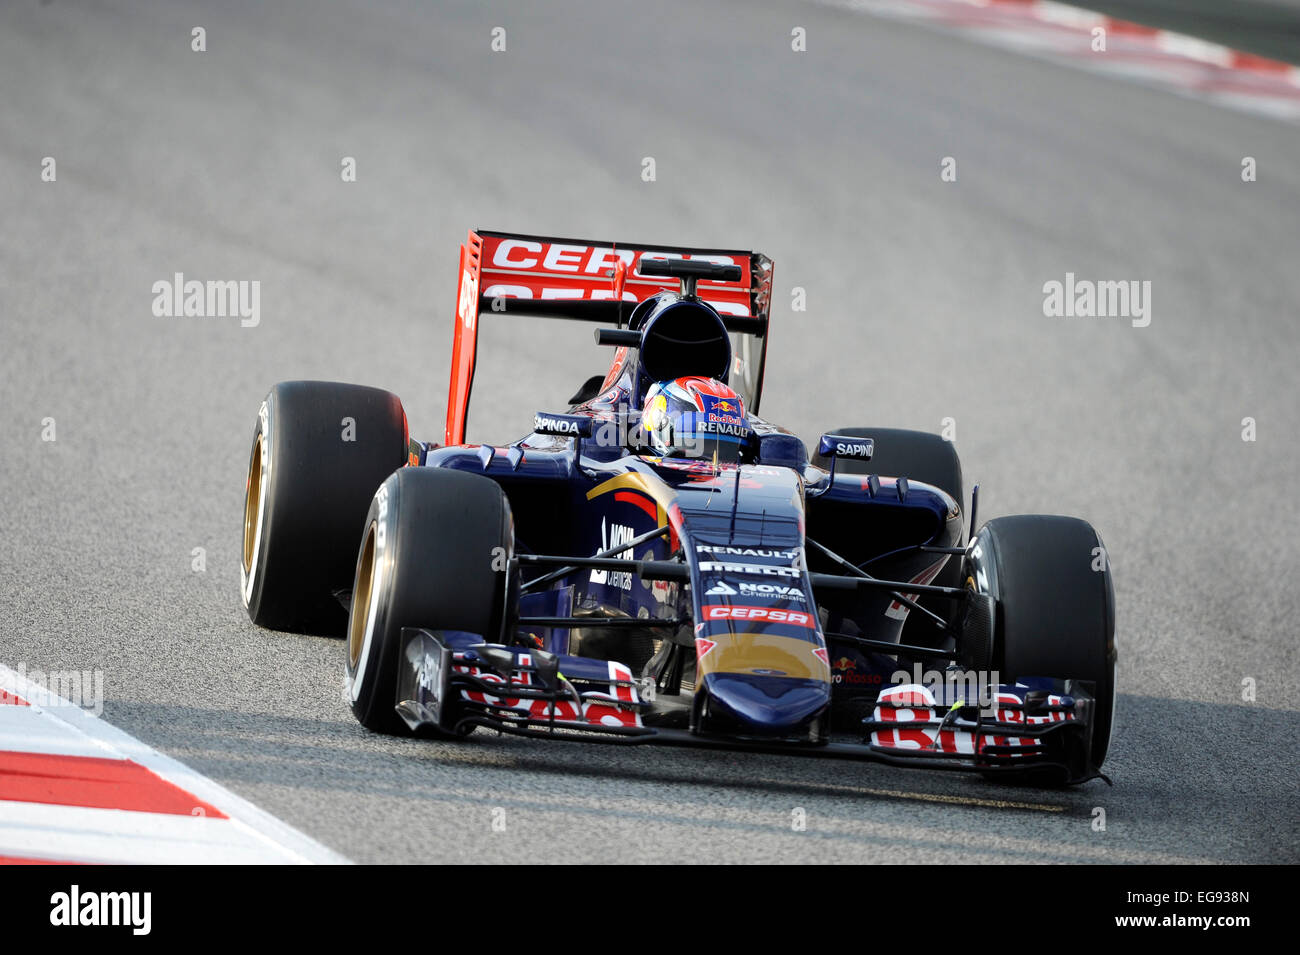 Barcelona, Spain. 19th Feb, 2015. Circuit de Catalunya racetrack, Montmelo near Barcelona, 19.-22.2.2015, Formula 1 Winter Tests  -- Max Verstappen (NED), Toro Rosso STR10 Credit:  kolvenbach/Alamy Live News Stock Photo